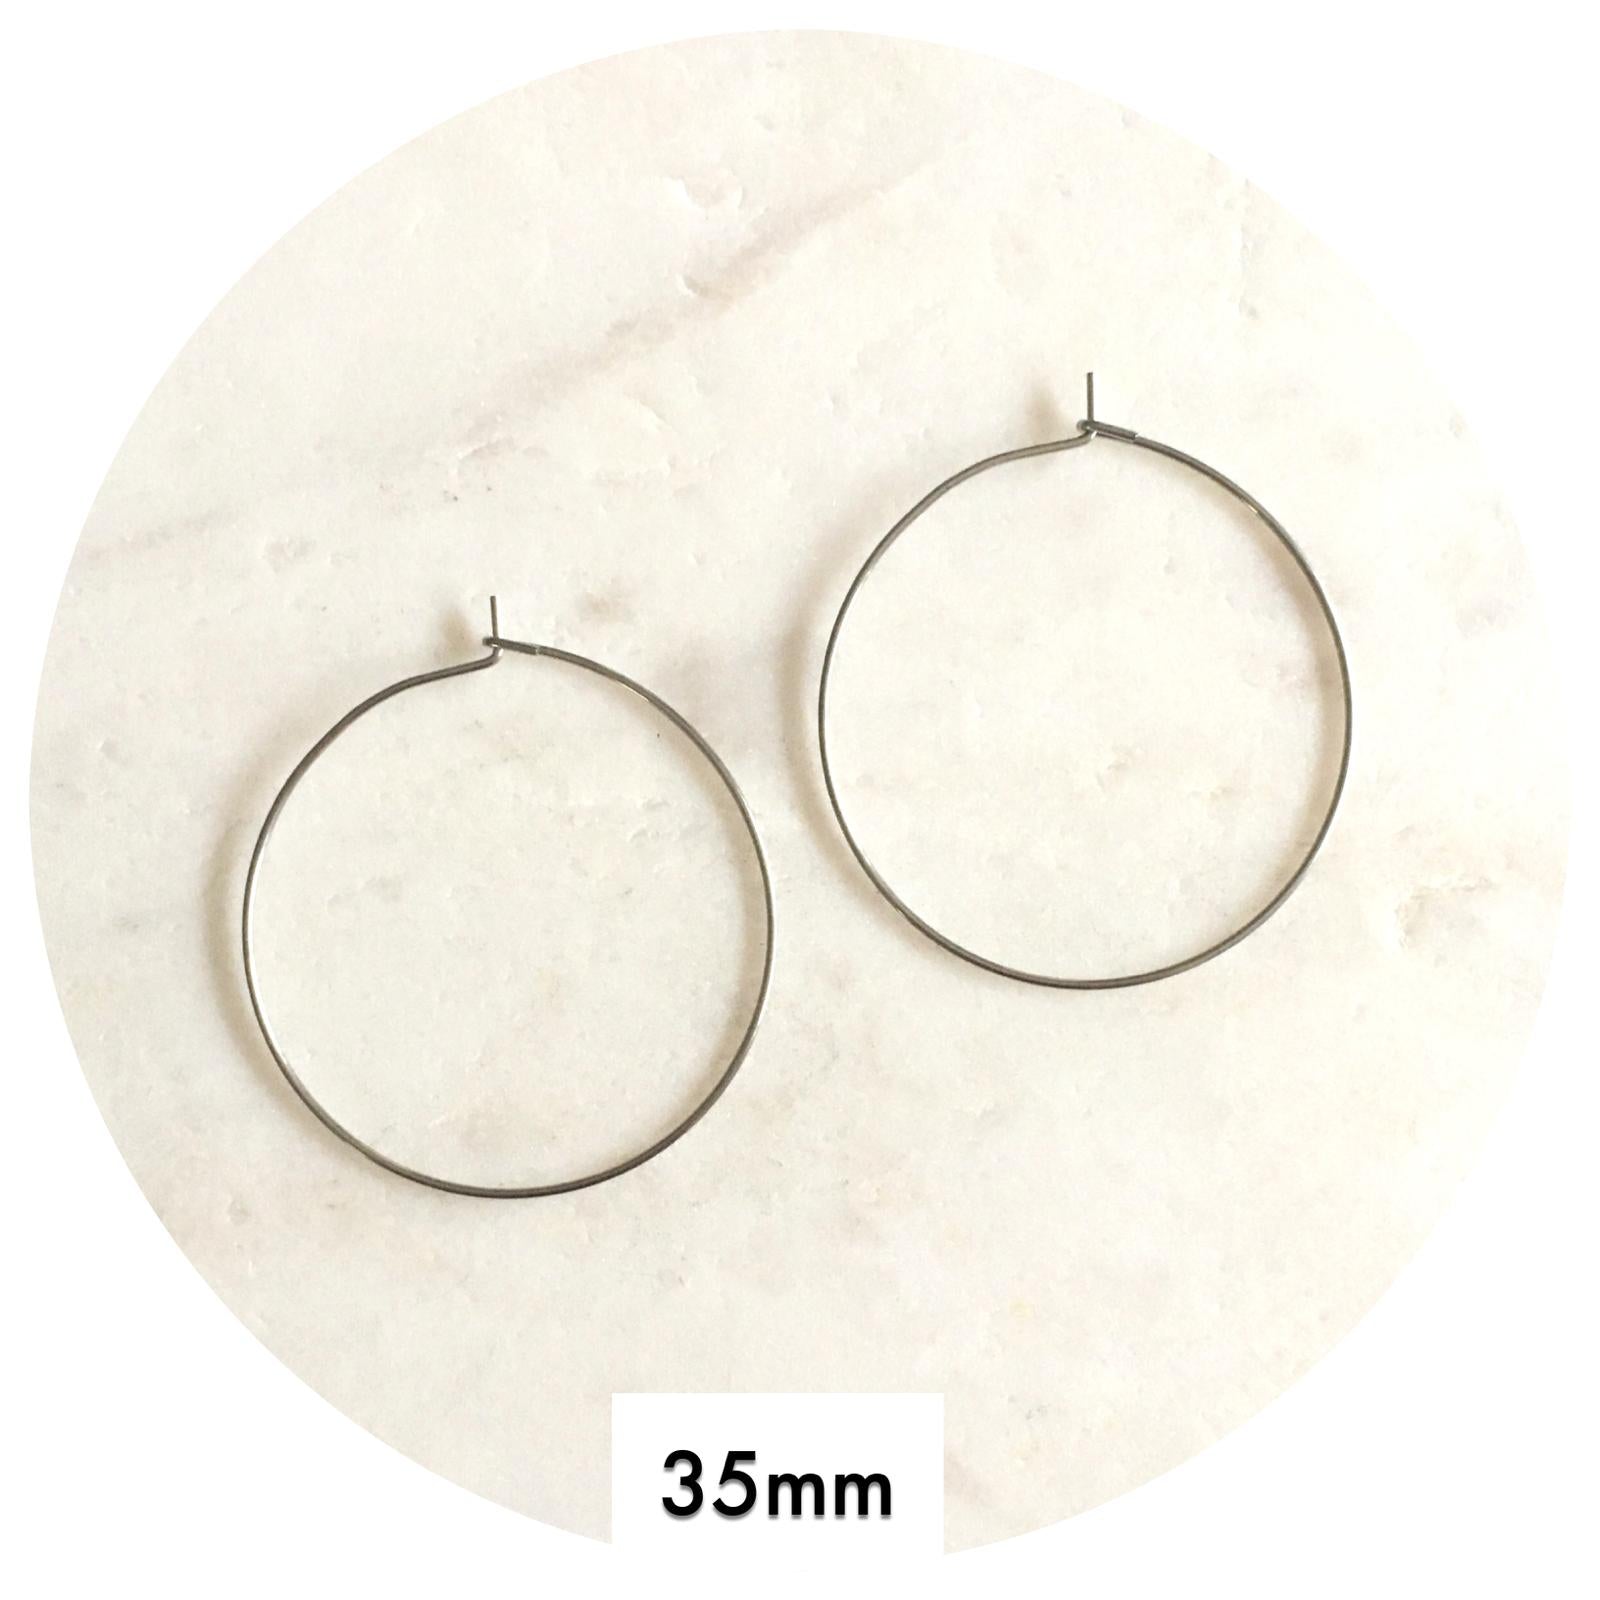 35mm Stainless Steel Earring Wire Hoops - 2 pcs - BS2265